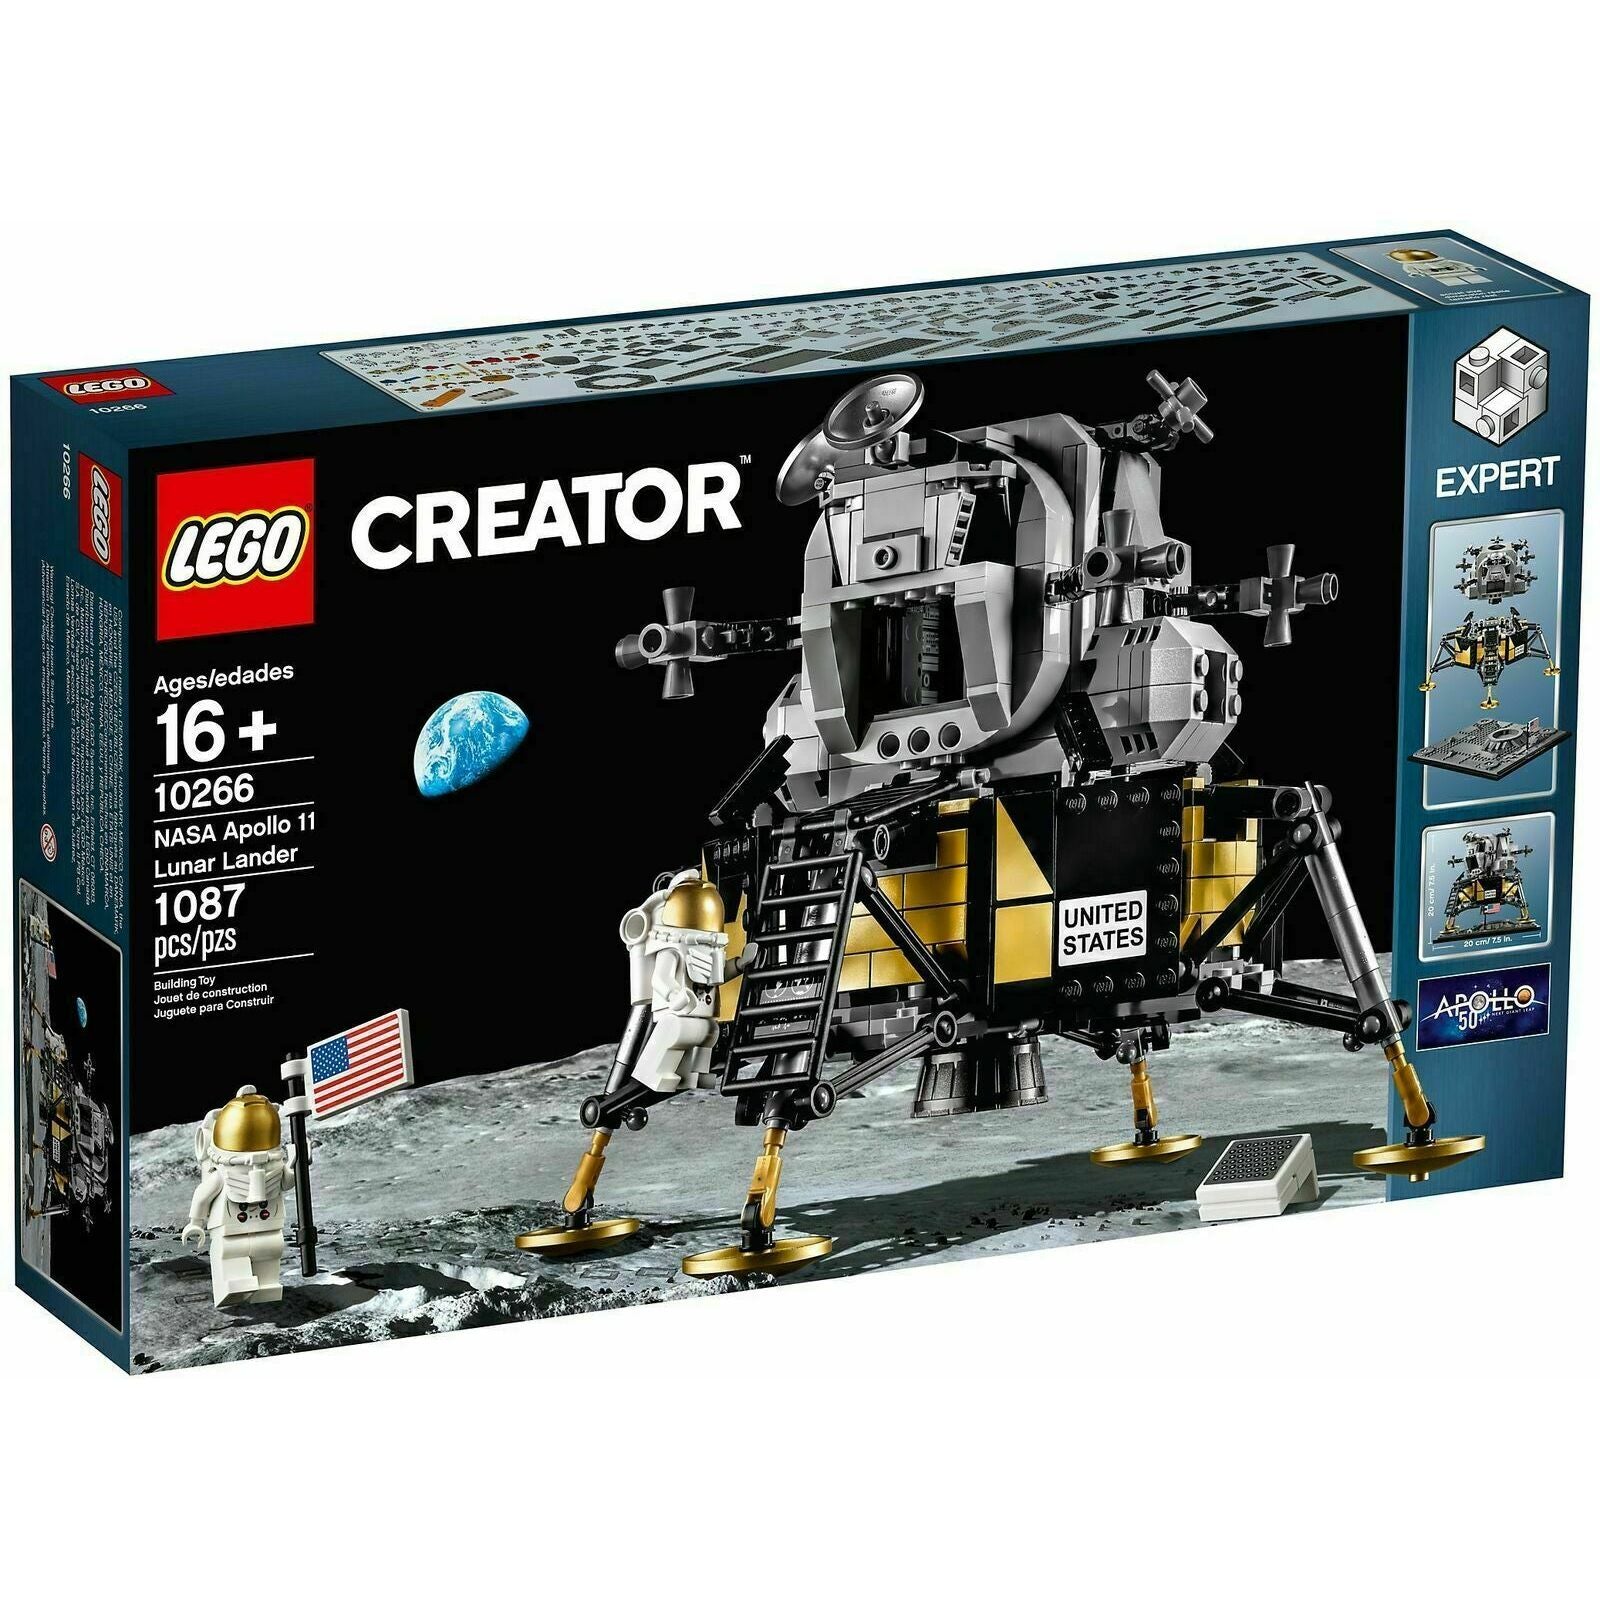 *Brand New & Sealed* LEGO Creator NASA Apollo 11 Lunar Lander 10266 - Aus Stock